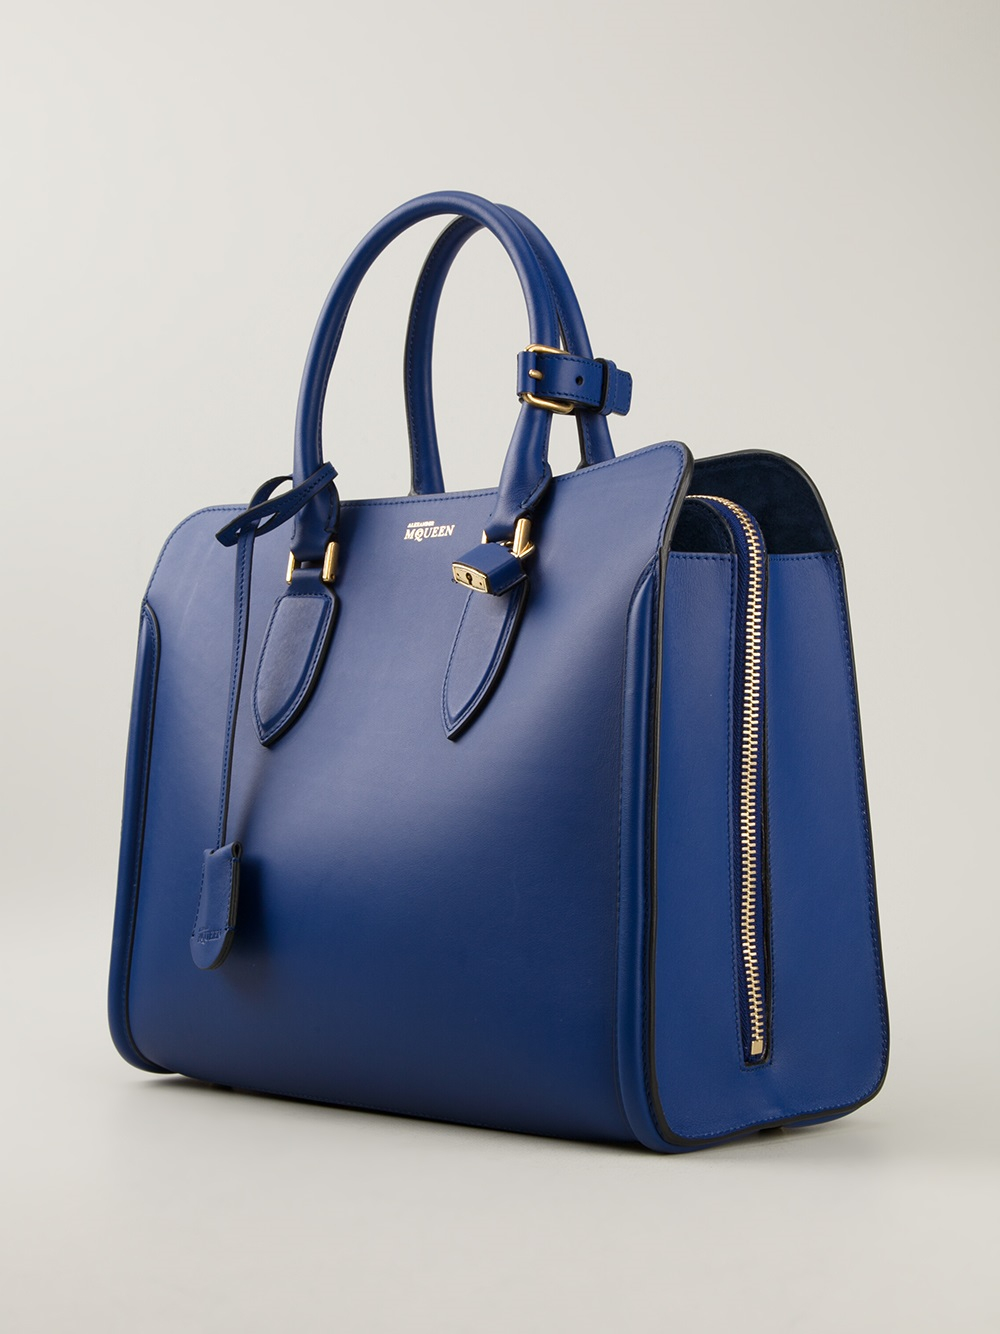 Alexander McQueen Padlock Tote Bag in Blue - Lyst